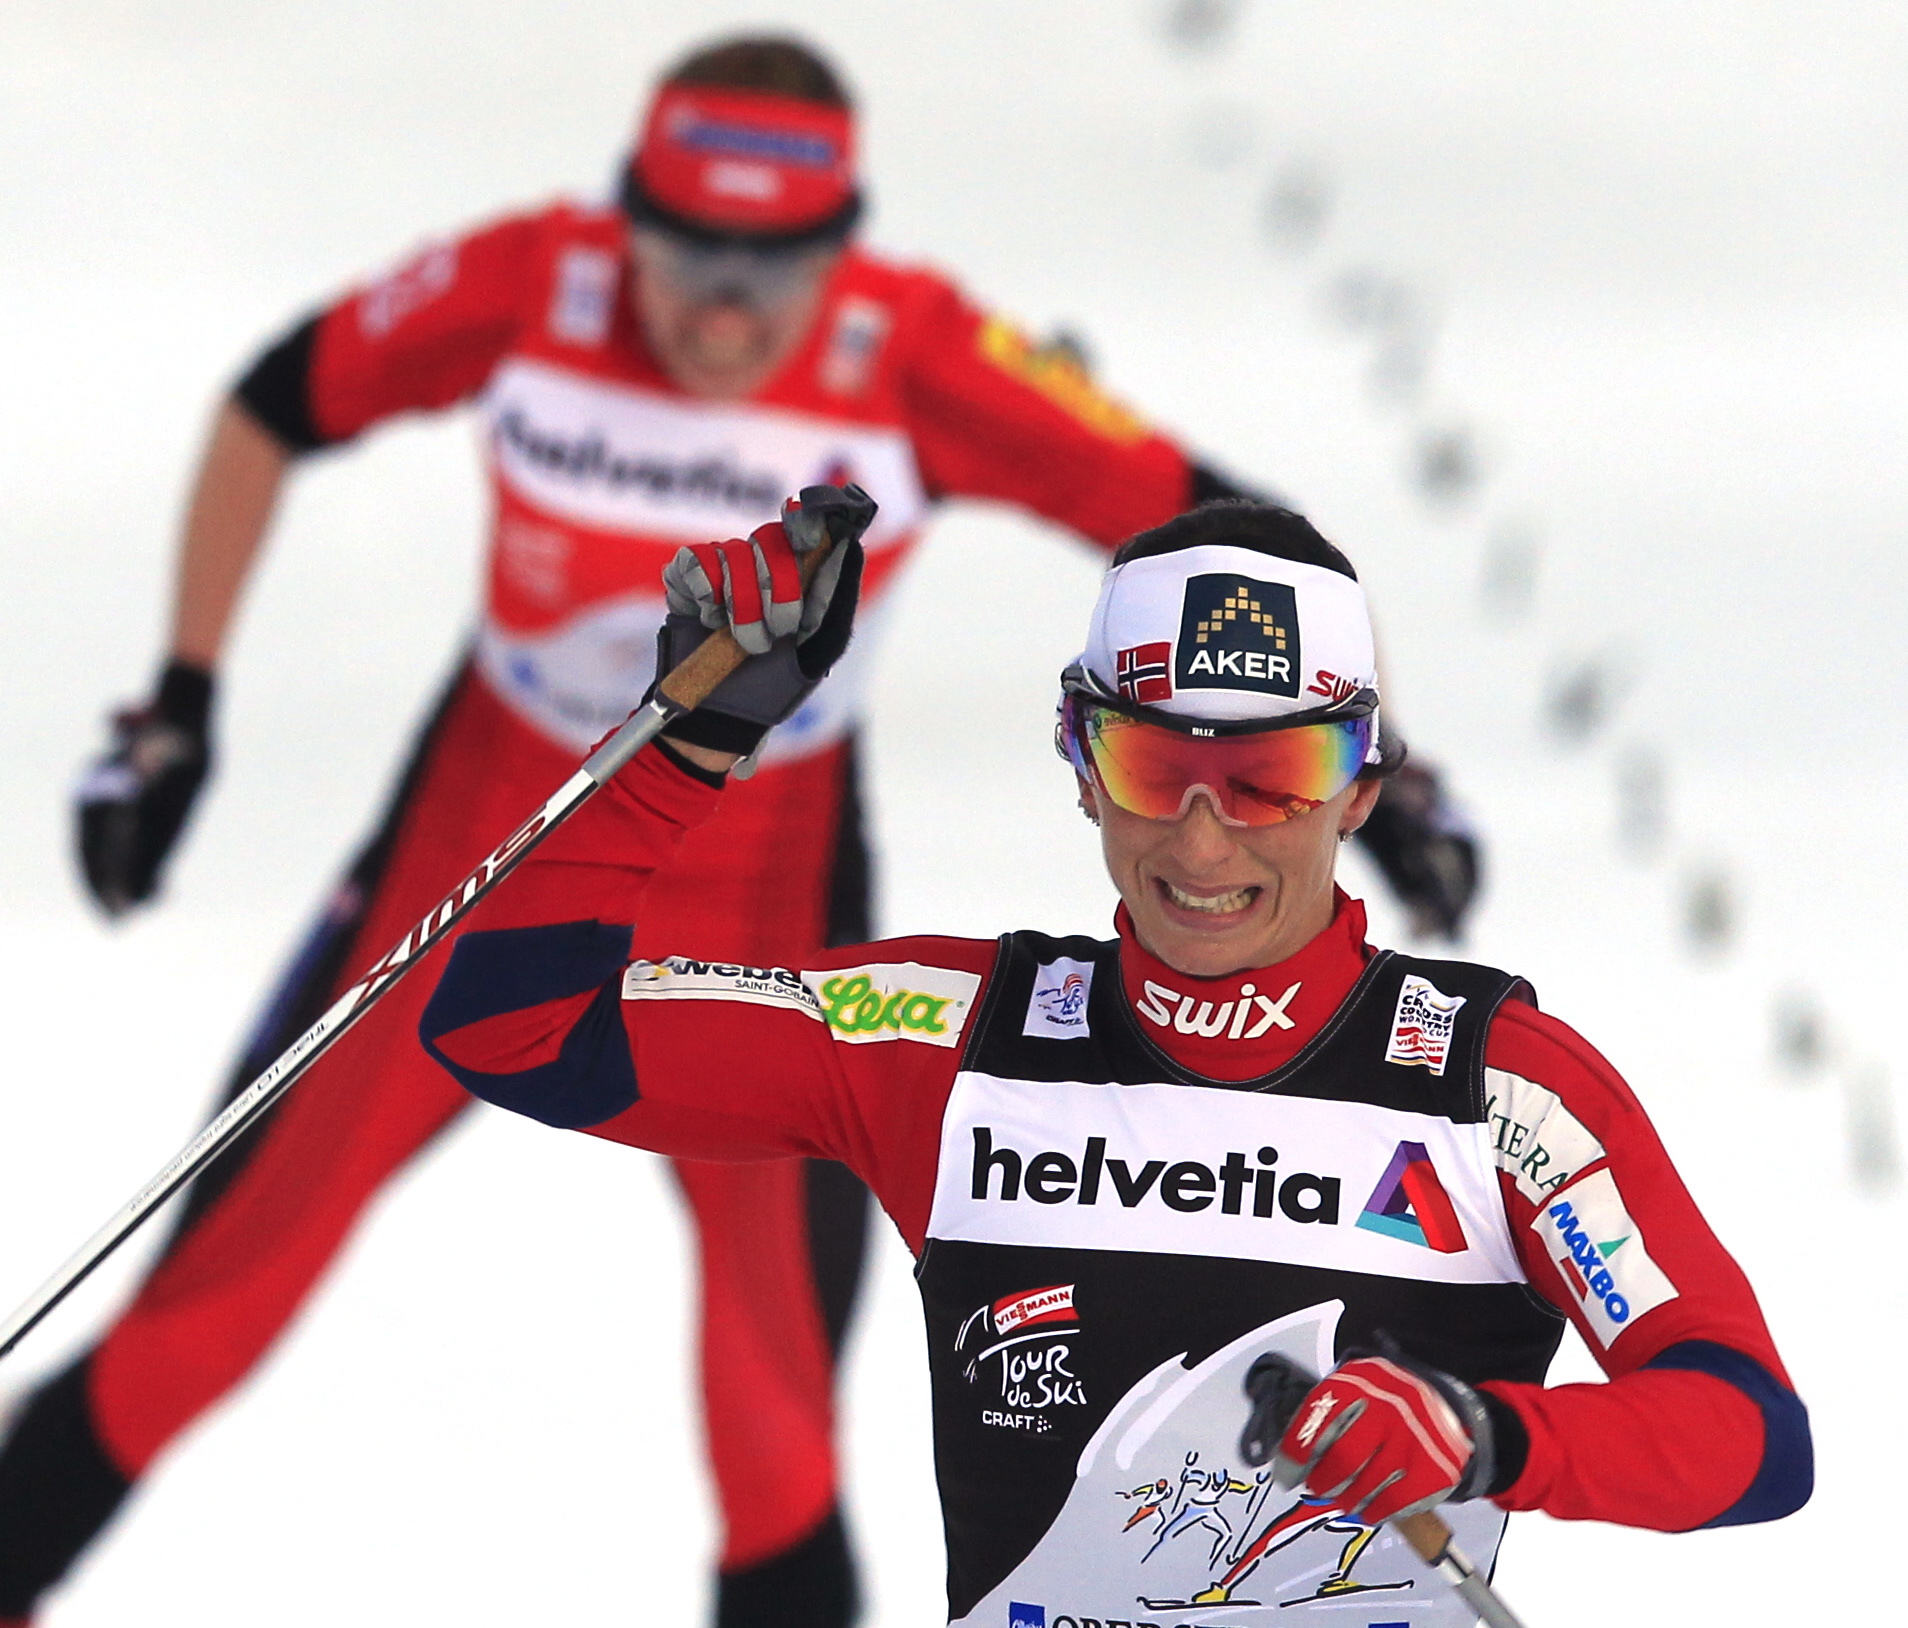 Tour de Ski, Charlotte Kalla, Längdskidor, Teodor Petersson, Marit Björgen, Justyna Kowalczyk, Marcus Hellner